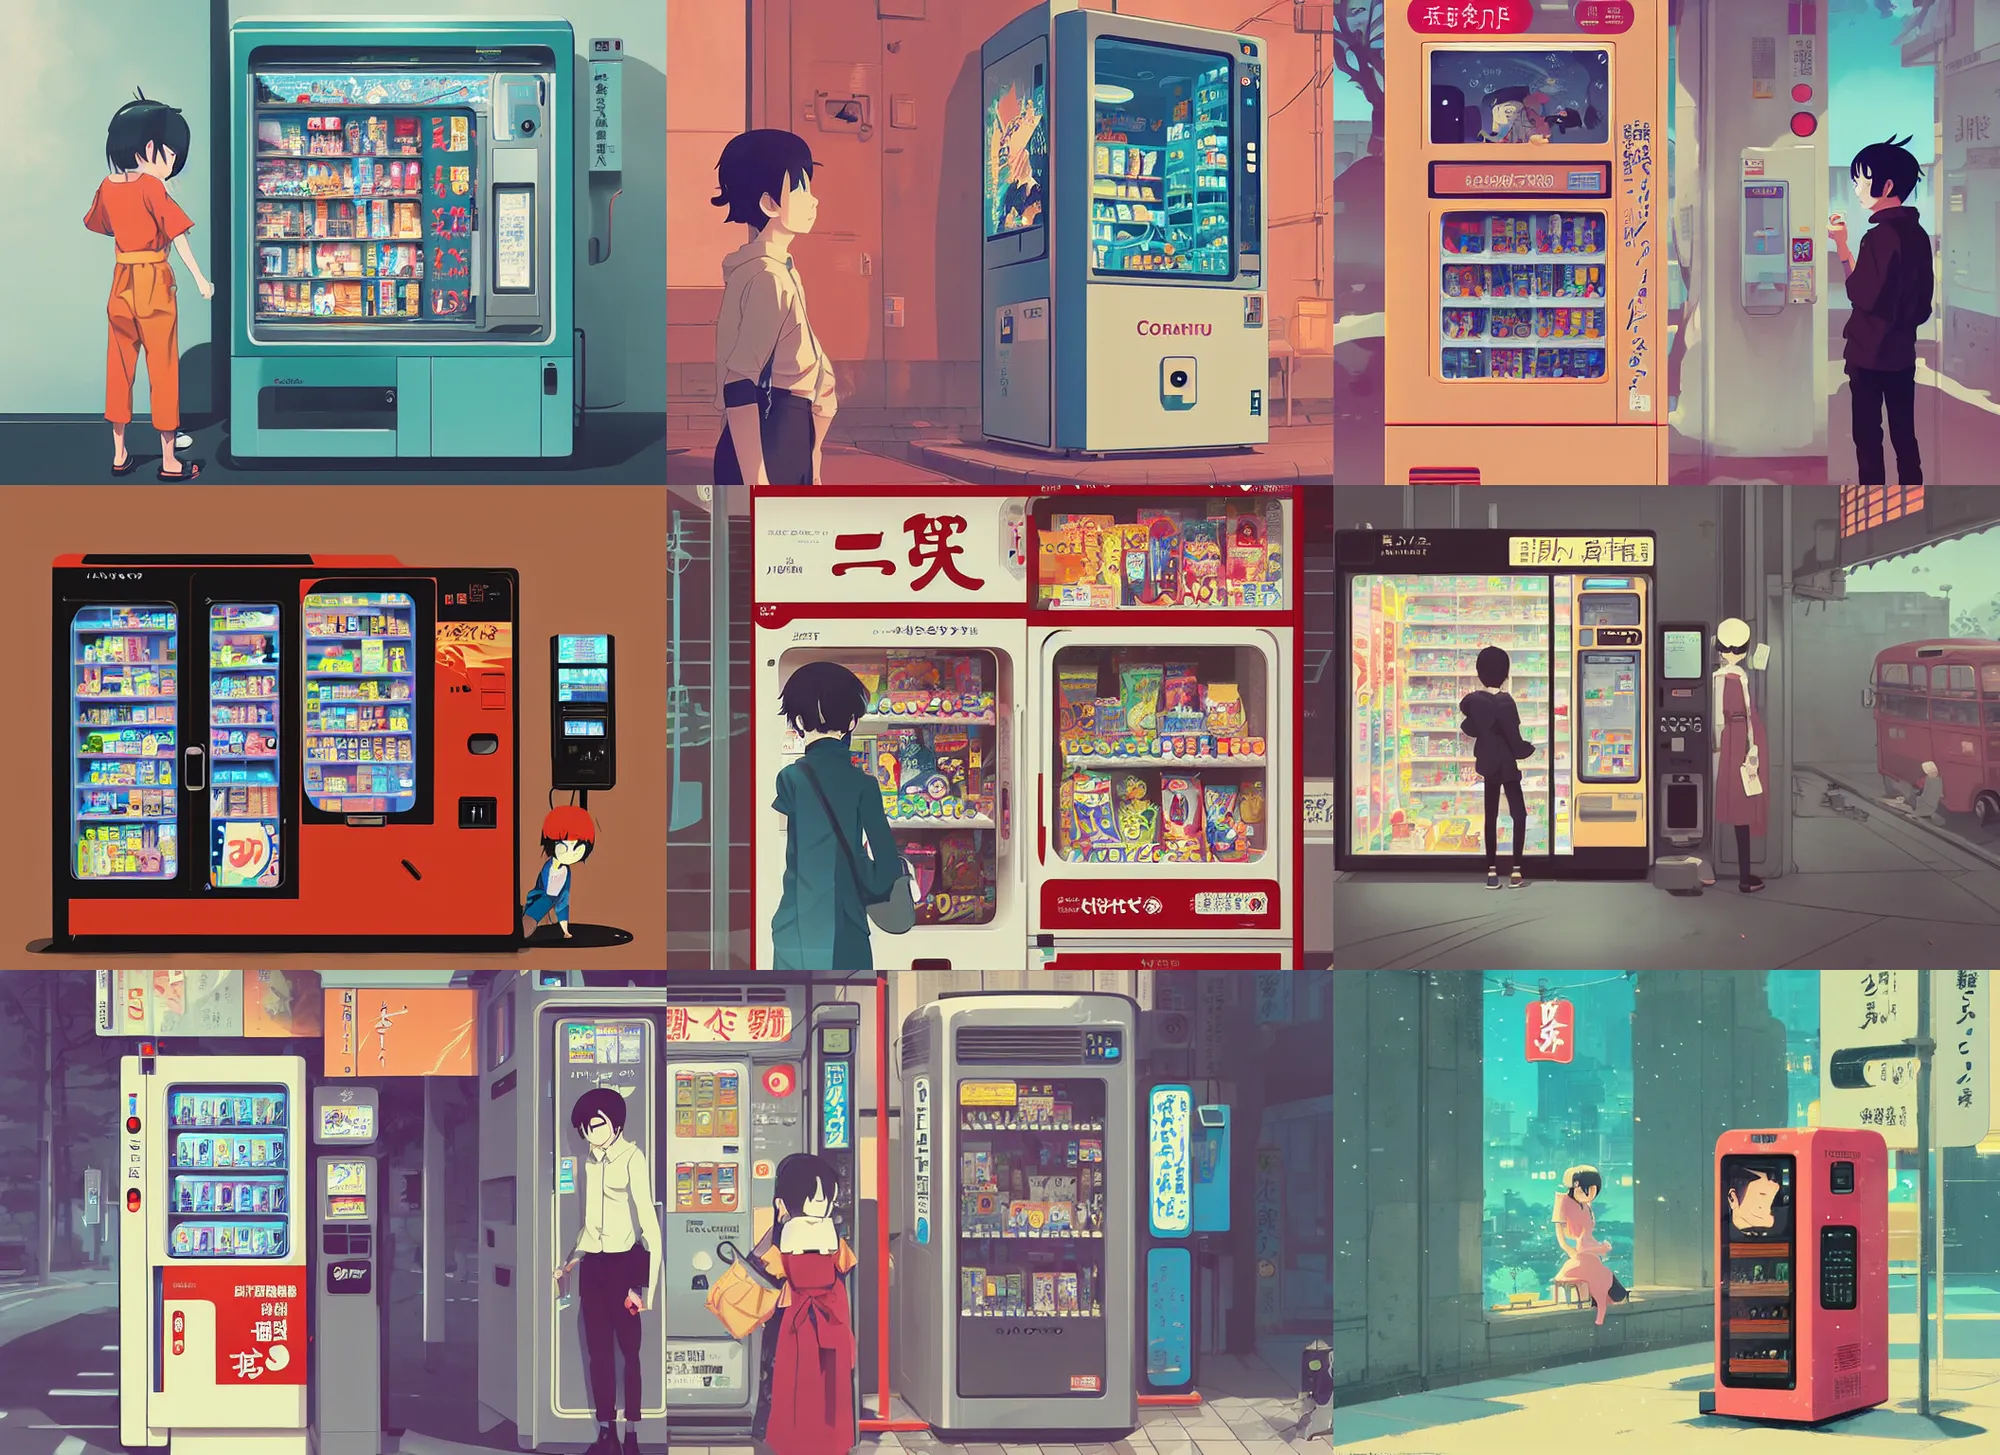 ArtStation - Naruto Vending Machine Illustration